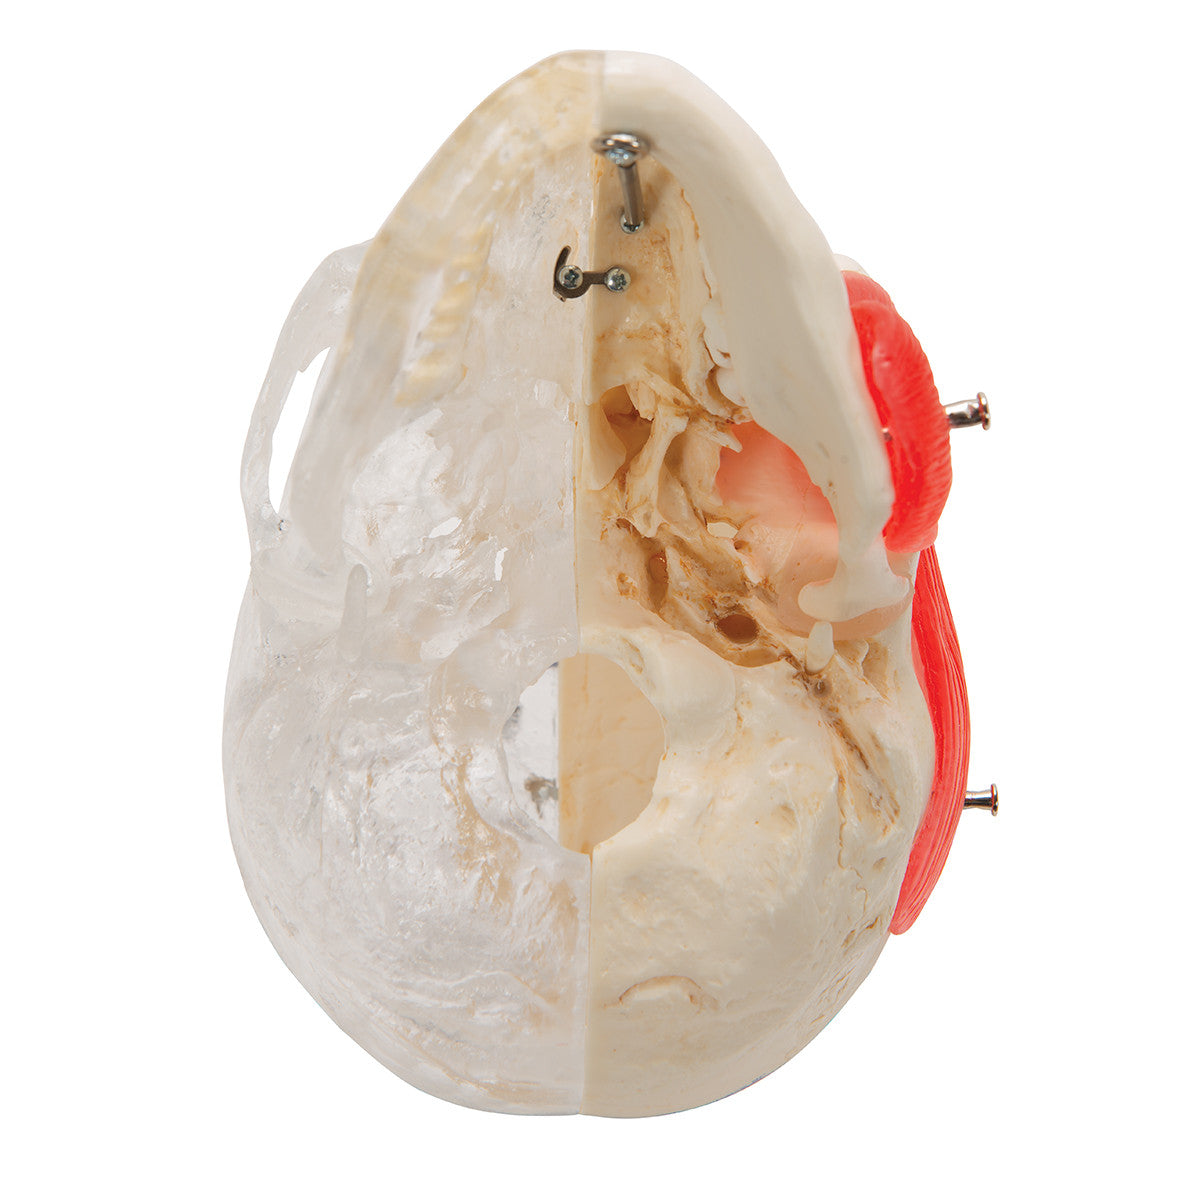 BONElike Human Skull Model, Half transparent and Half Bony, 8 part | 3B Scientific A282